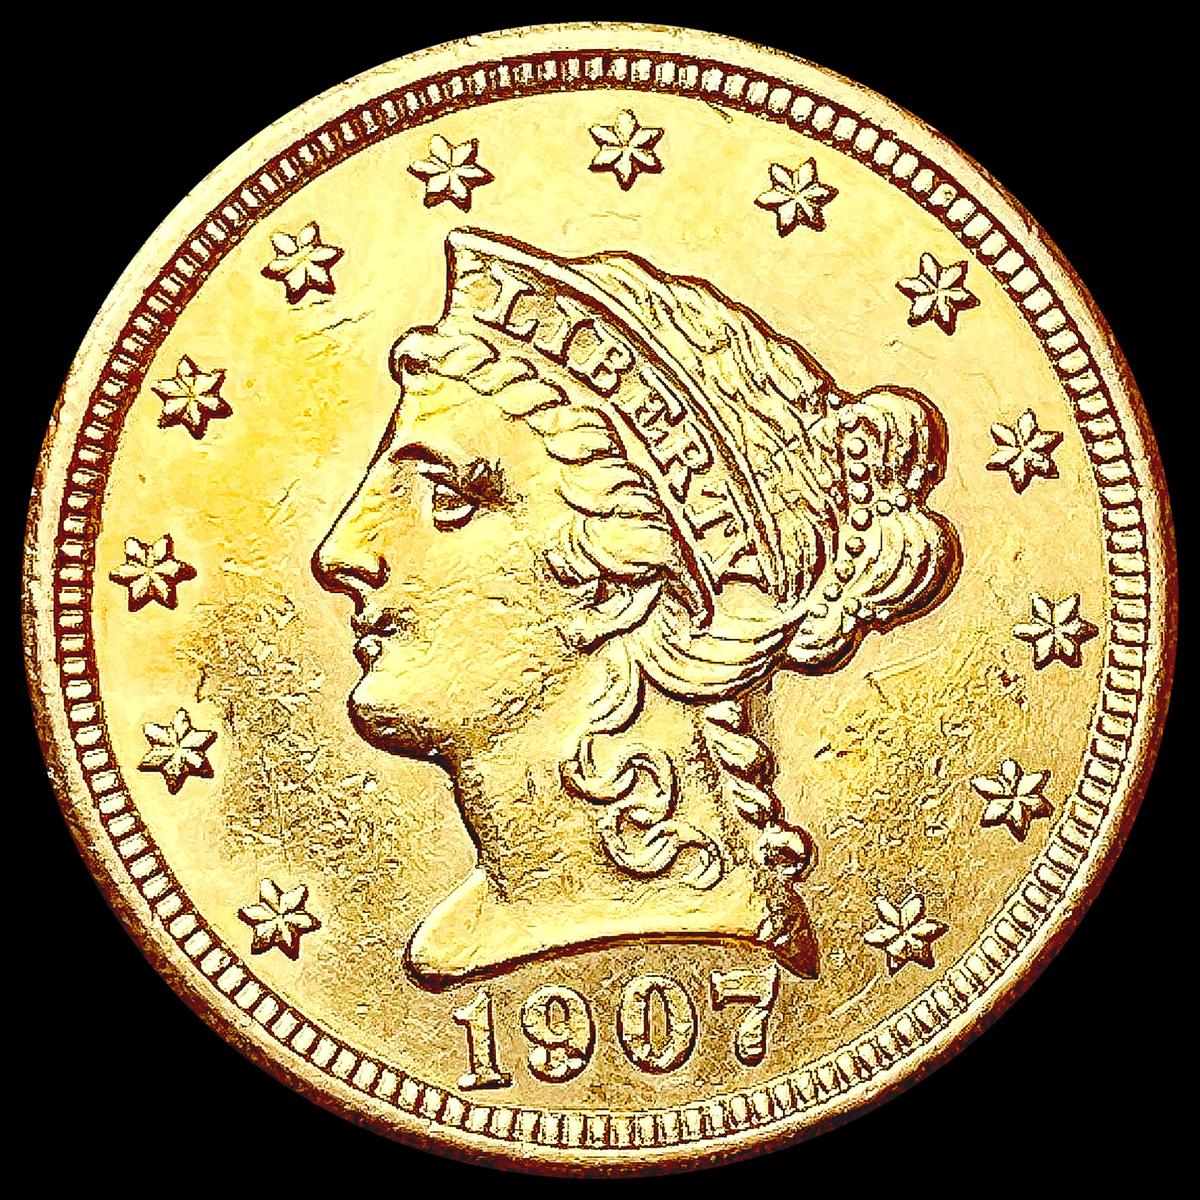 1907 $2.50 Gold Quarter Eagle UNCIRCULATED